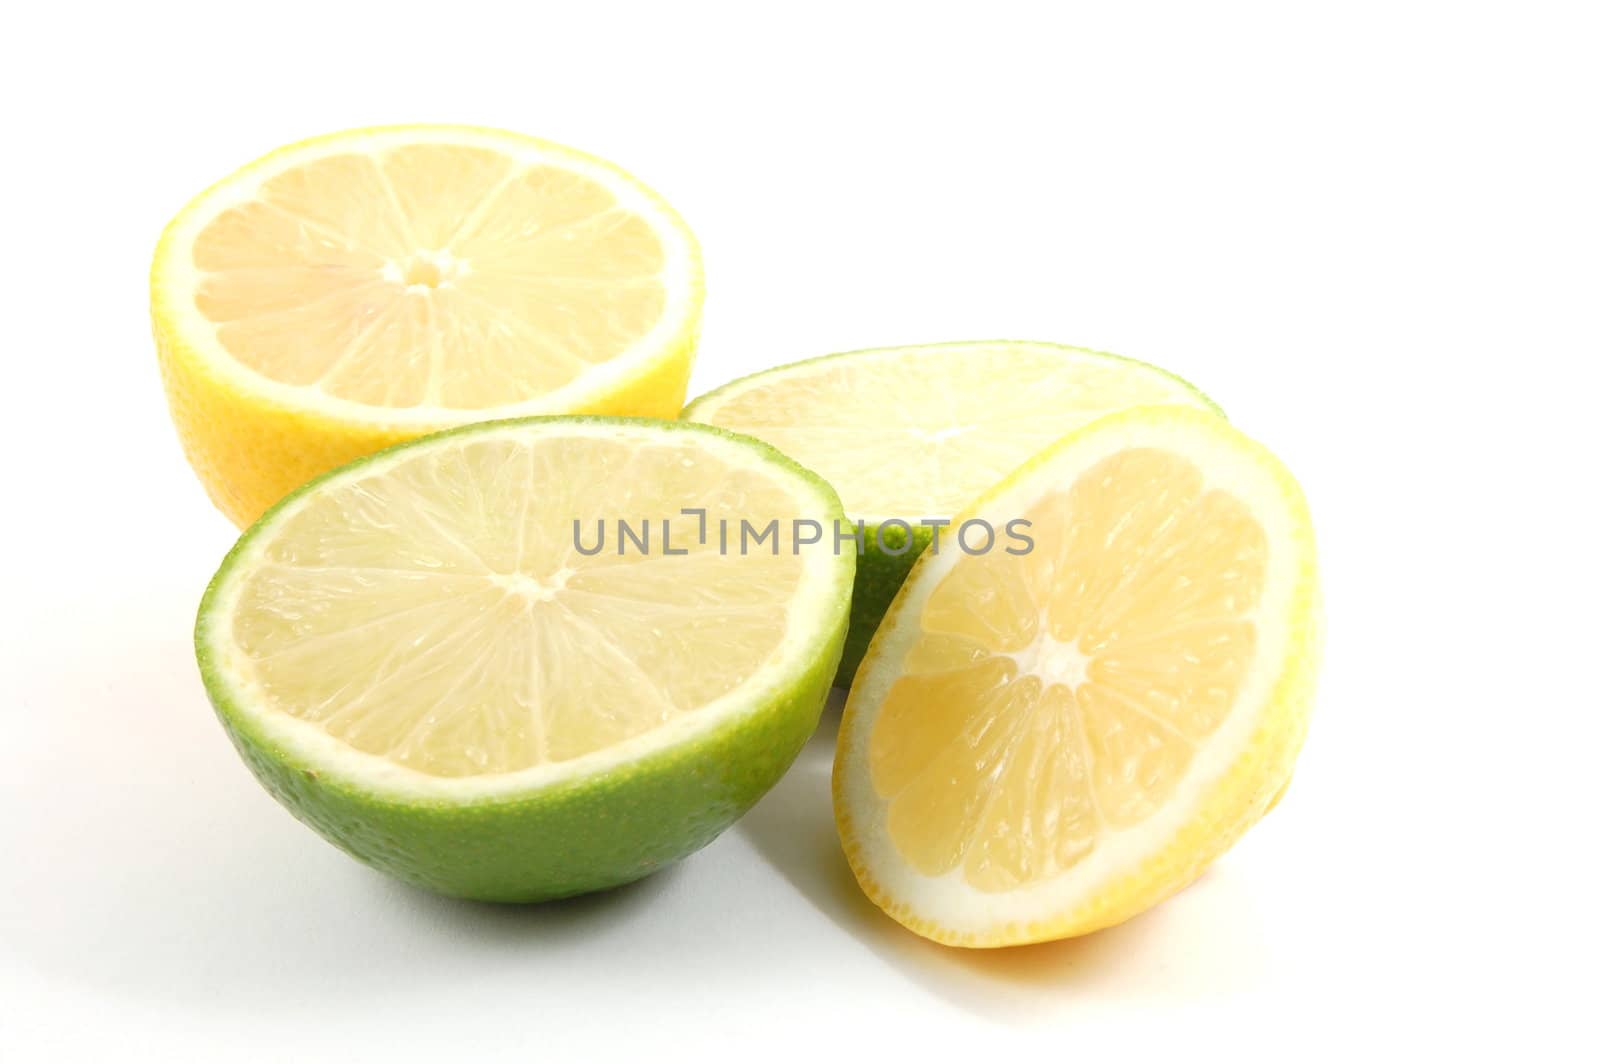 lemon orange and citron fruit by gunnar3000